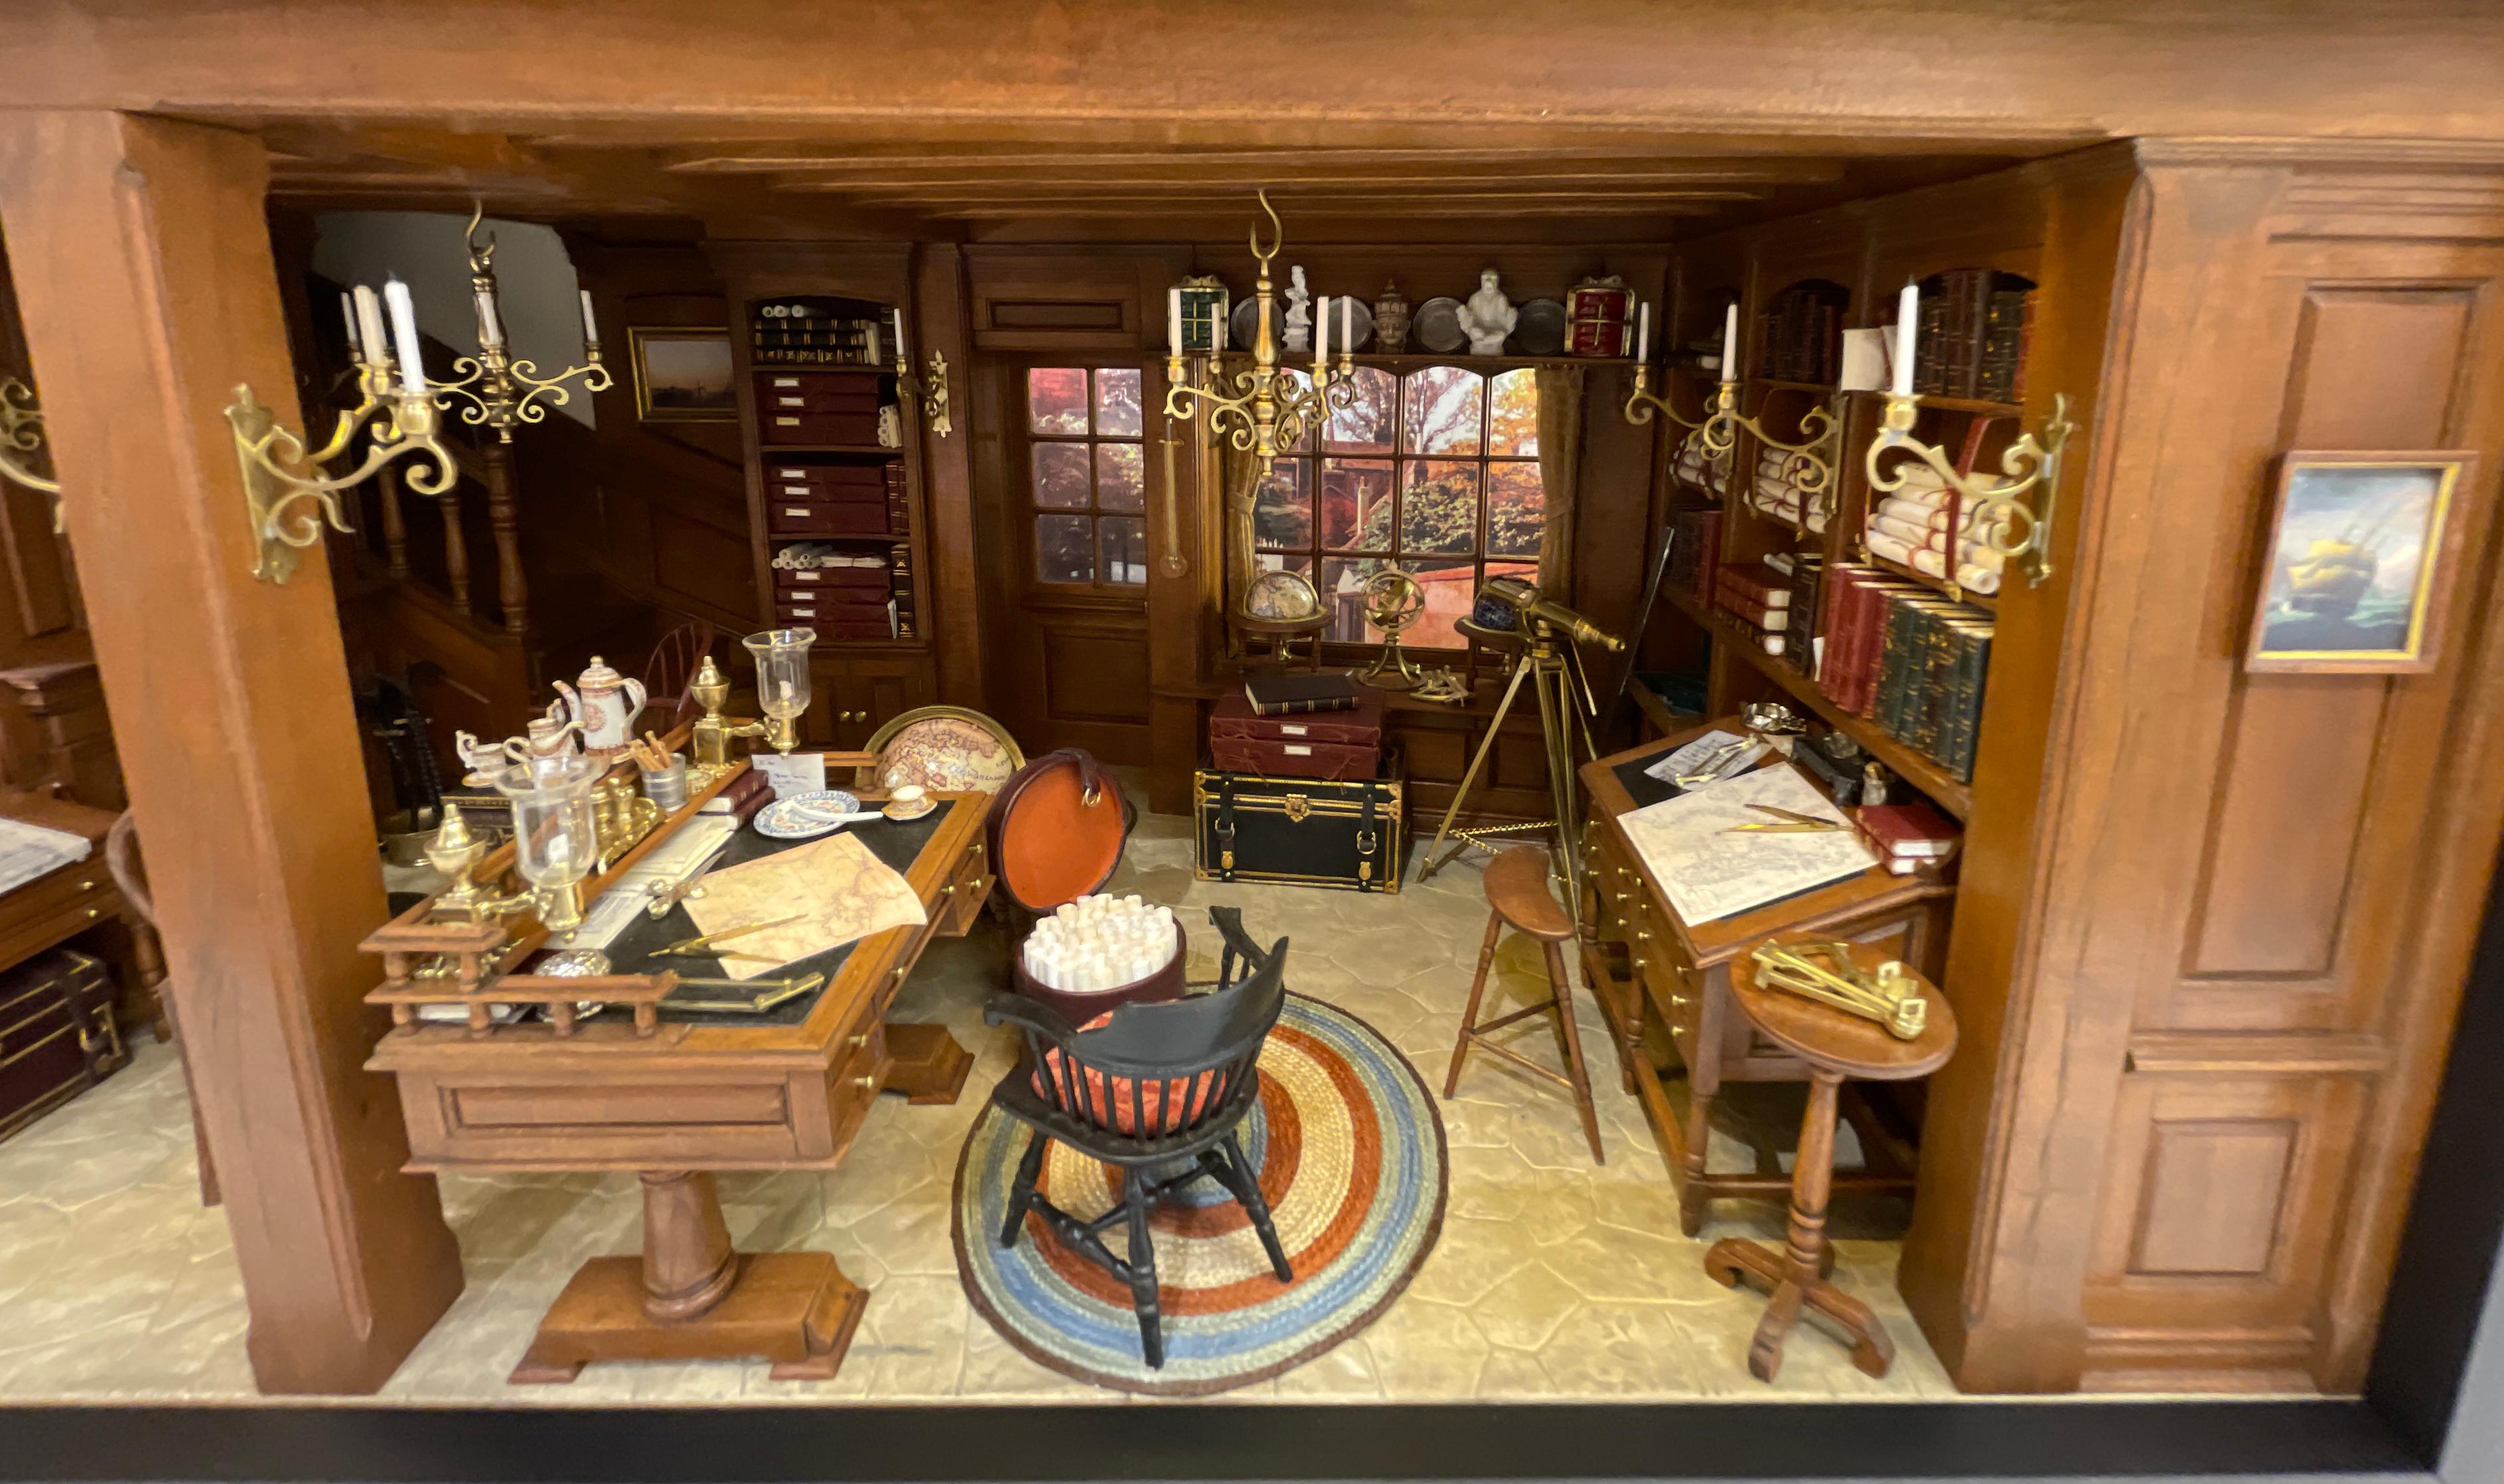 Büro eines Neuengland-Kartografen aus dem 18. Jahrhundert - Kupjack Studios Miniature Room im Angebot 2